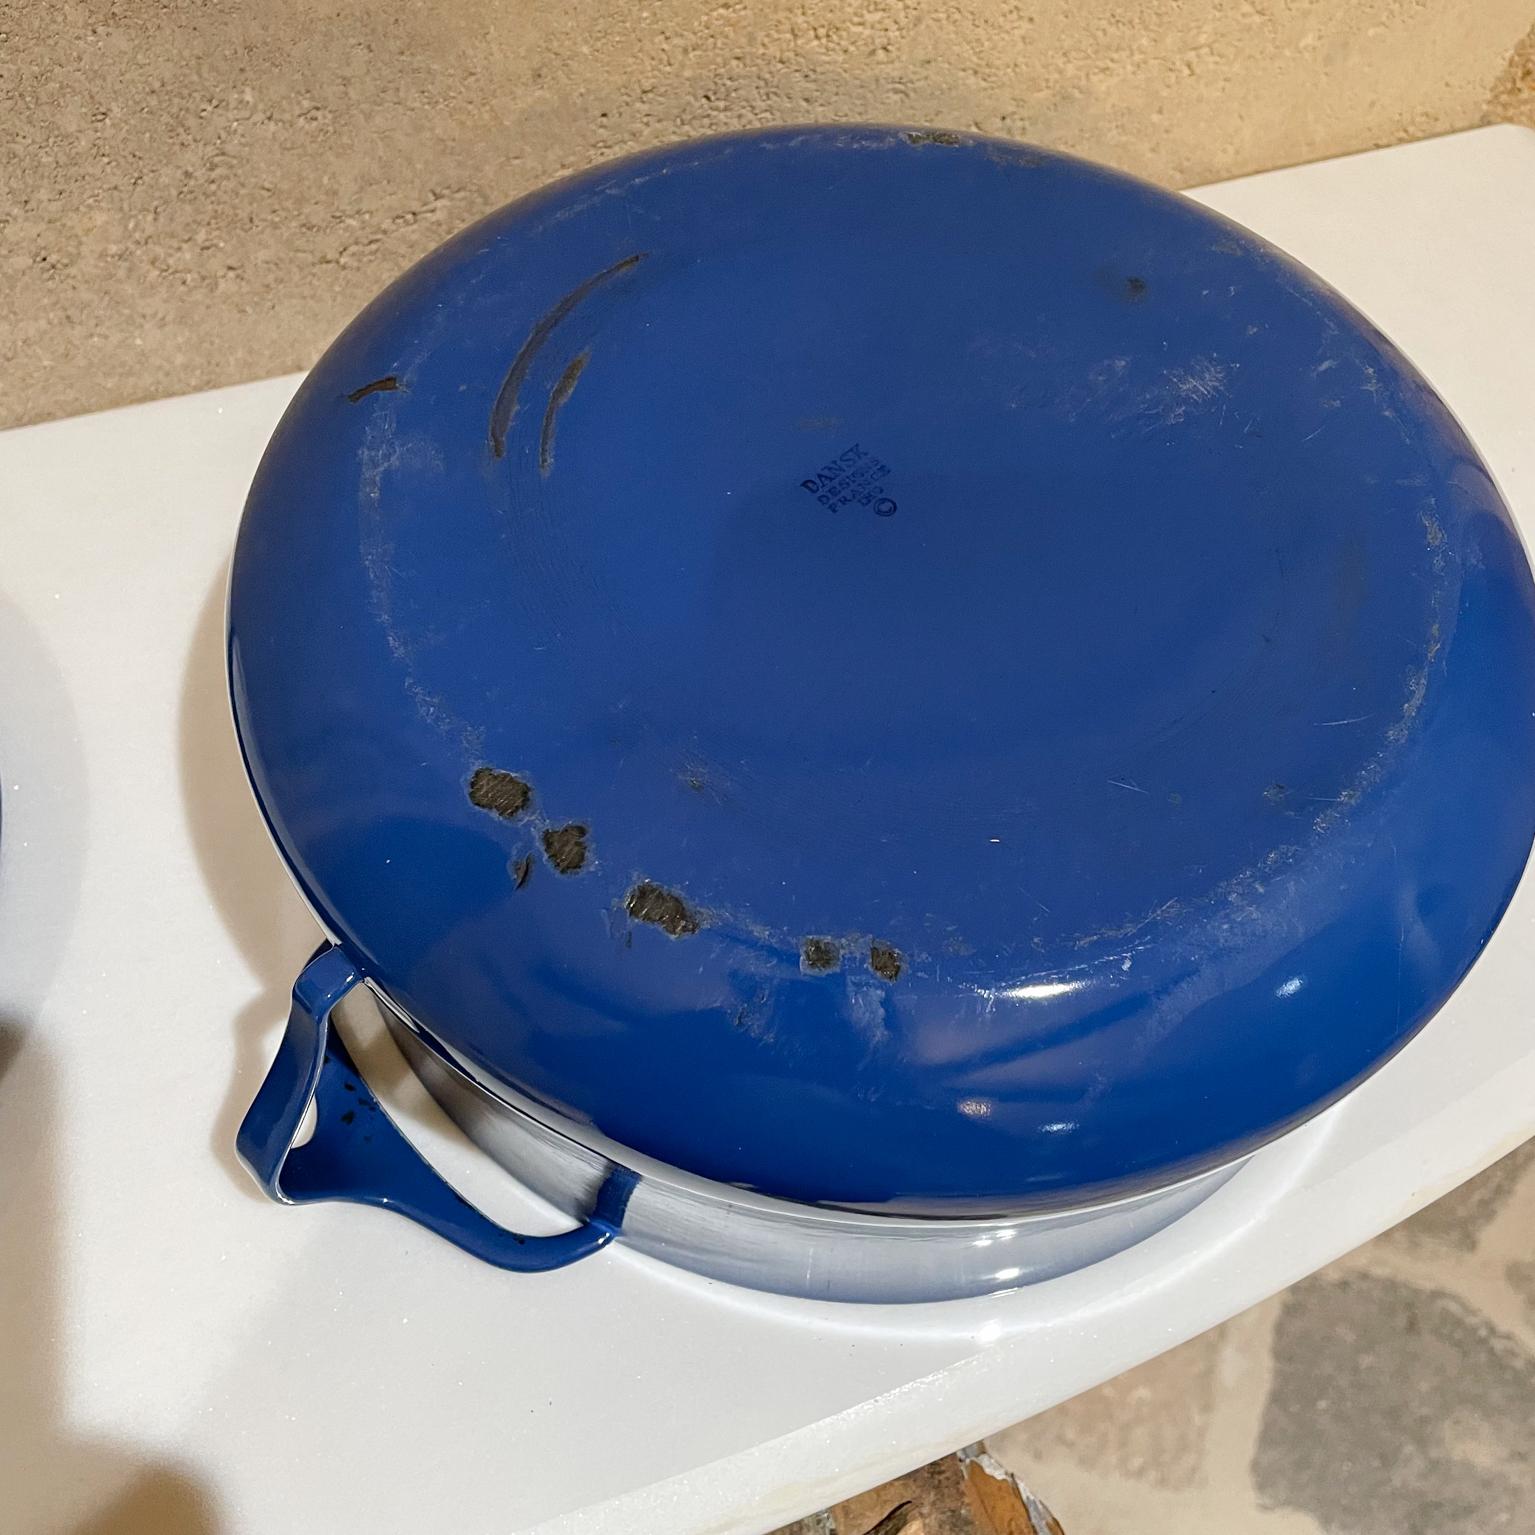 Dansk Designs Blue Enamelware Casserole Pot with Trivet Top IHQ France 2